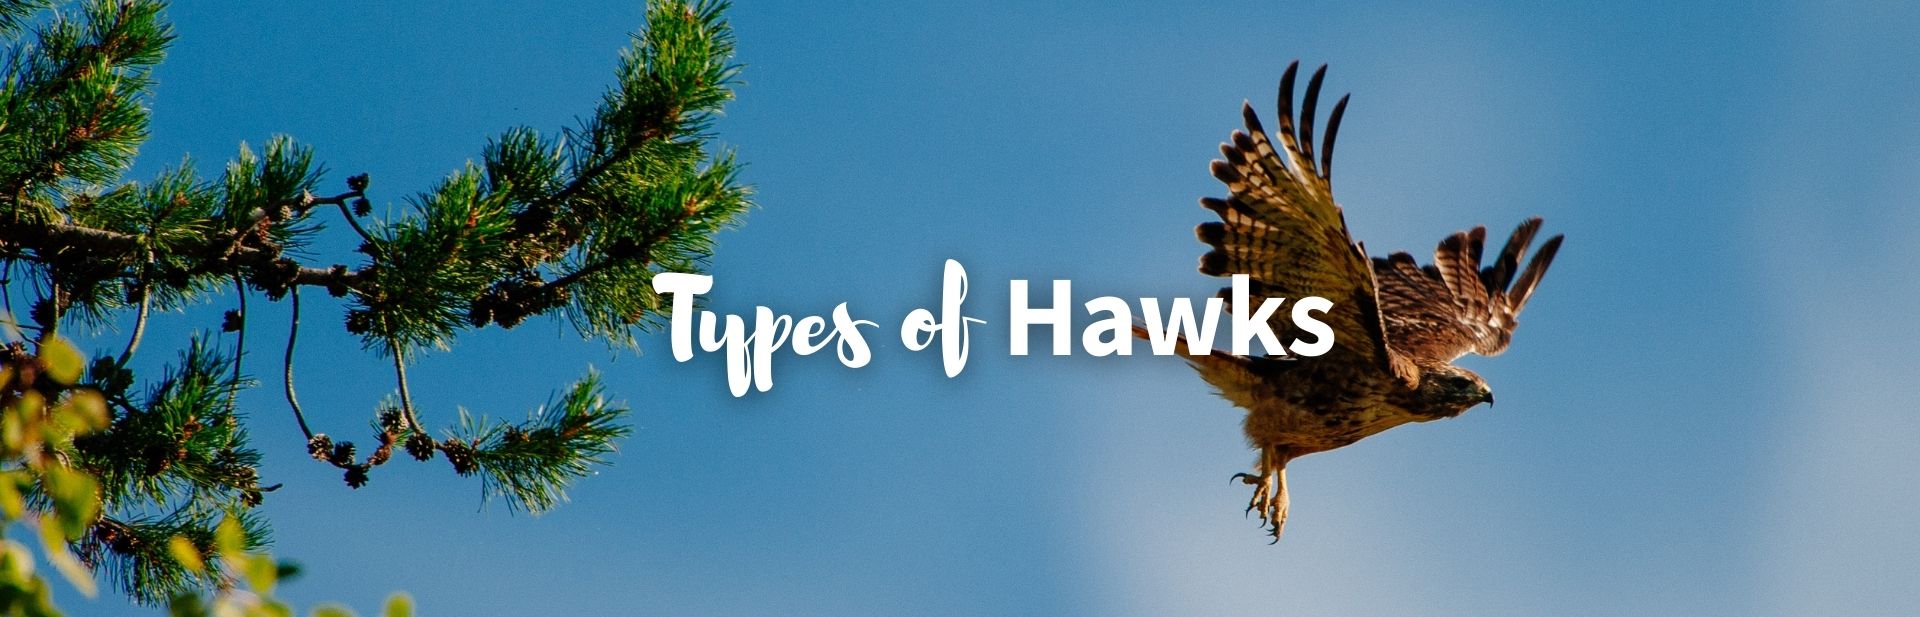 22 Types of Hawks, Legendary Birds of Prey : Pictures + Facts